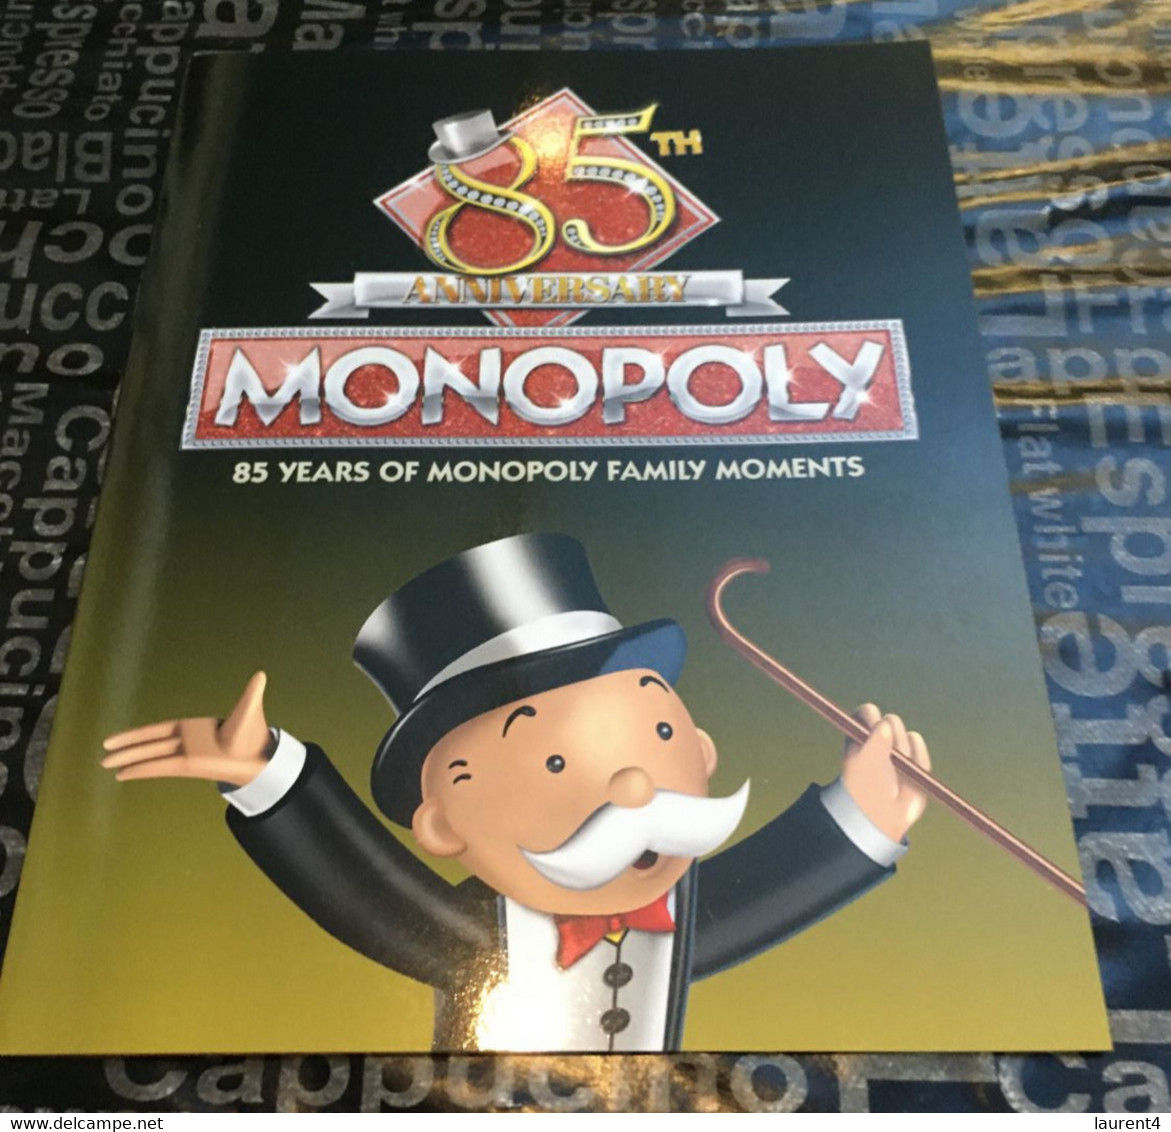 23-9-2021 - Australia - Monopoly 85th Anniversary - 1 Presetation Folder + 1 FDI 19 April 2021 Cover - Presentation Packs